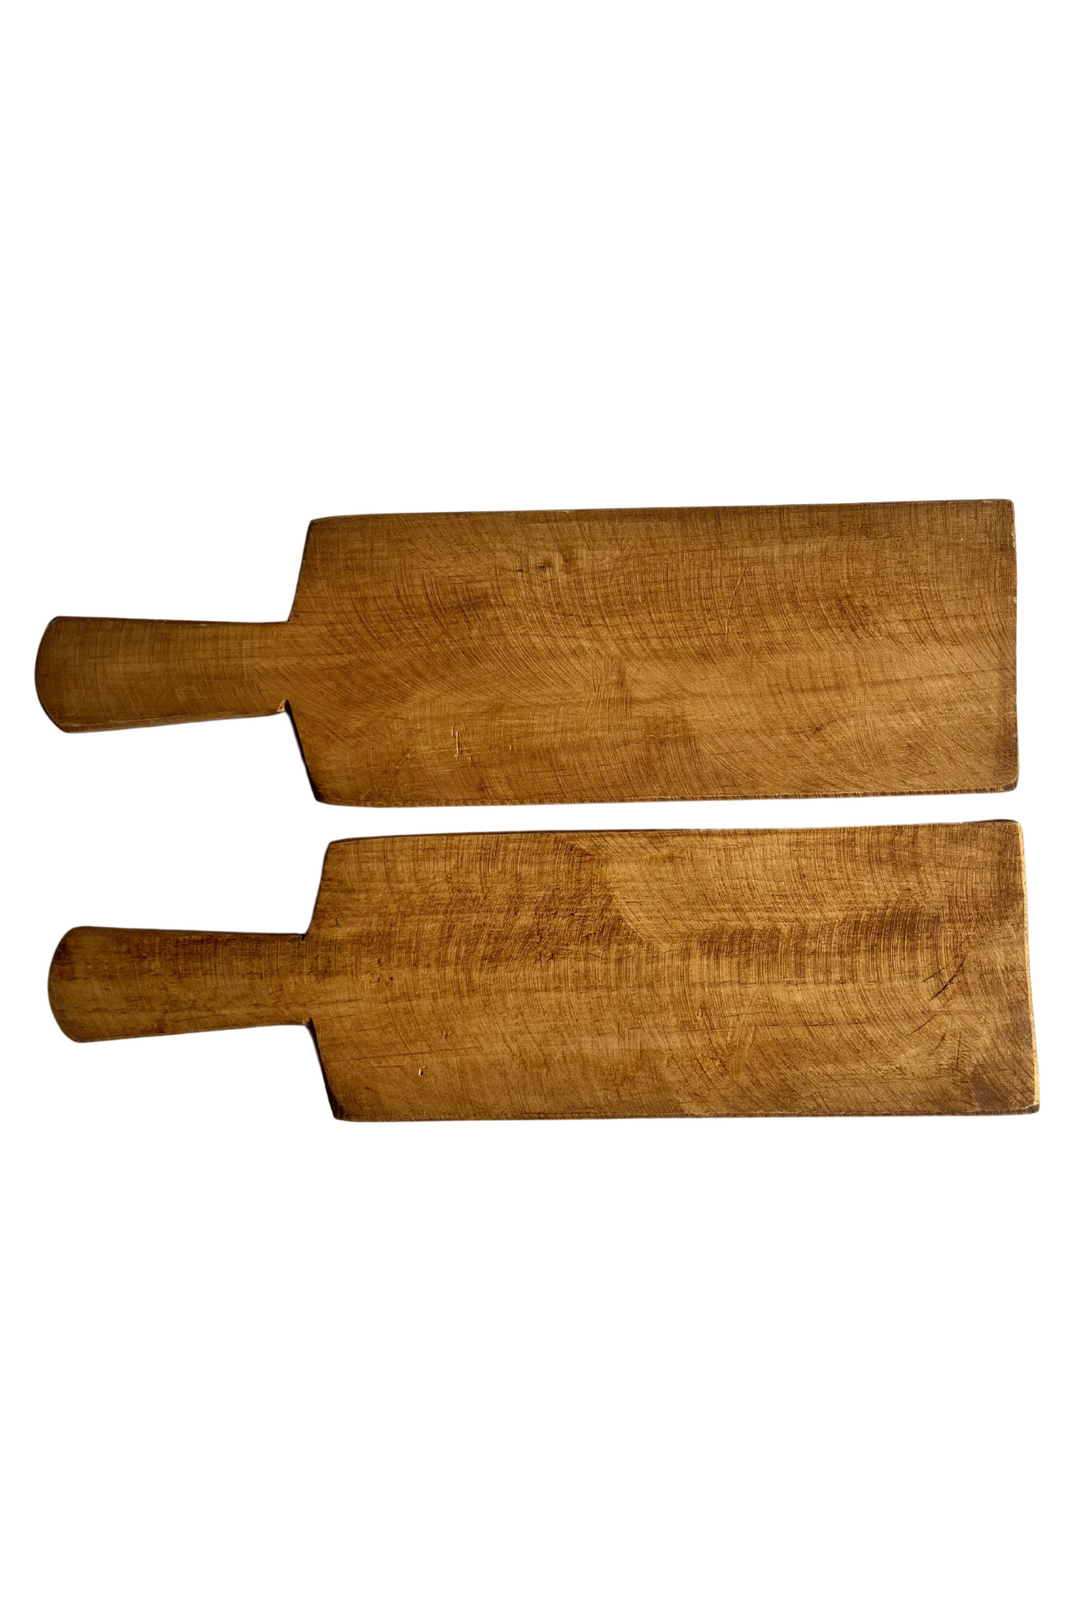 Elongated Wood Paddle Handled Serving Board